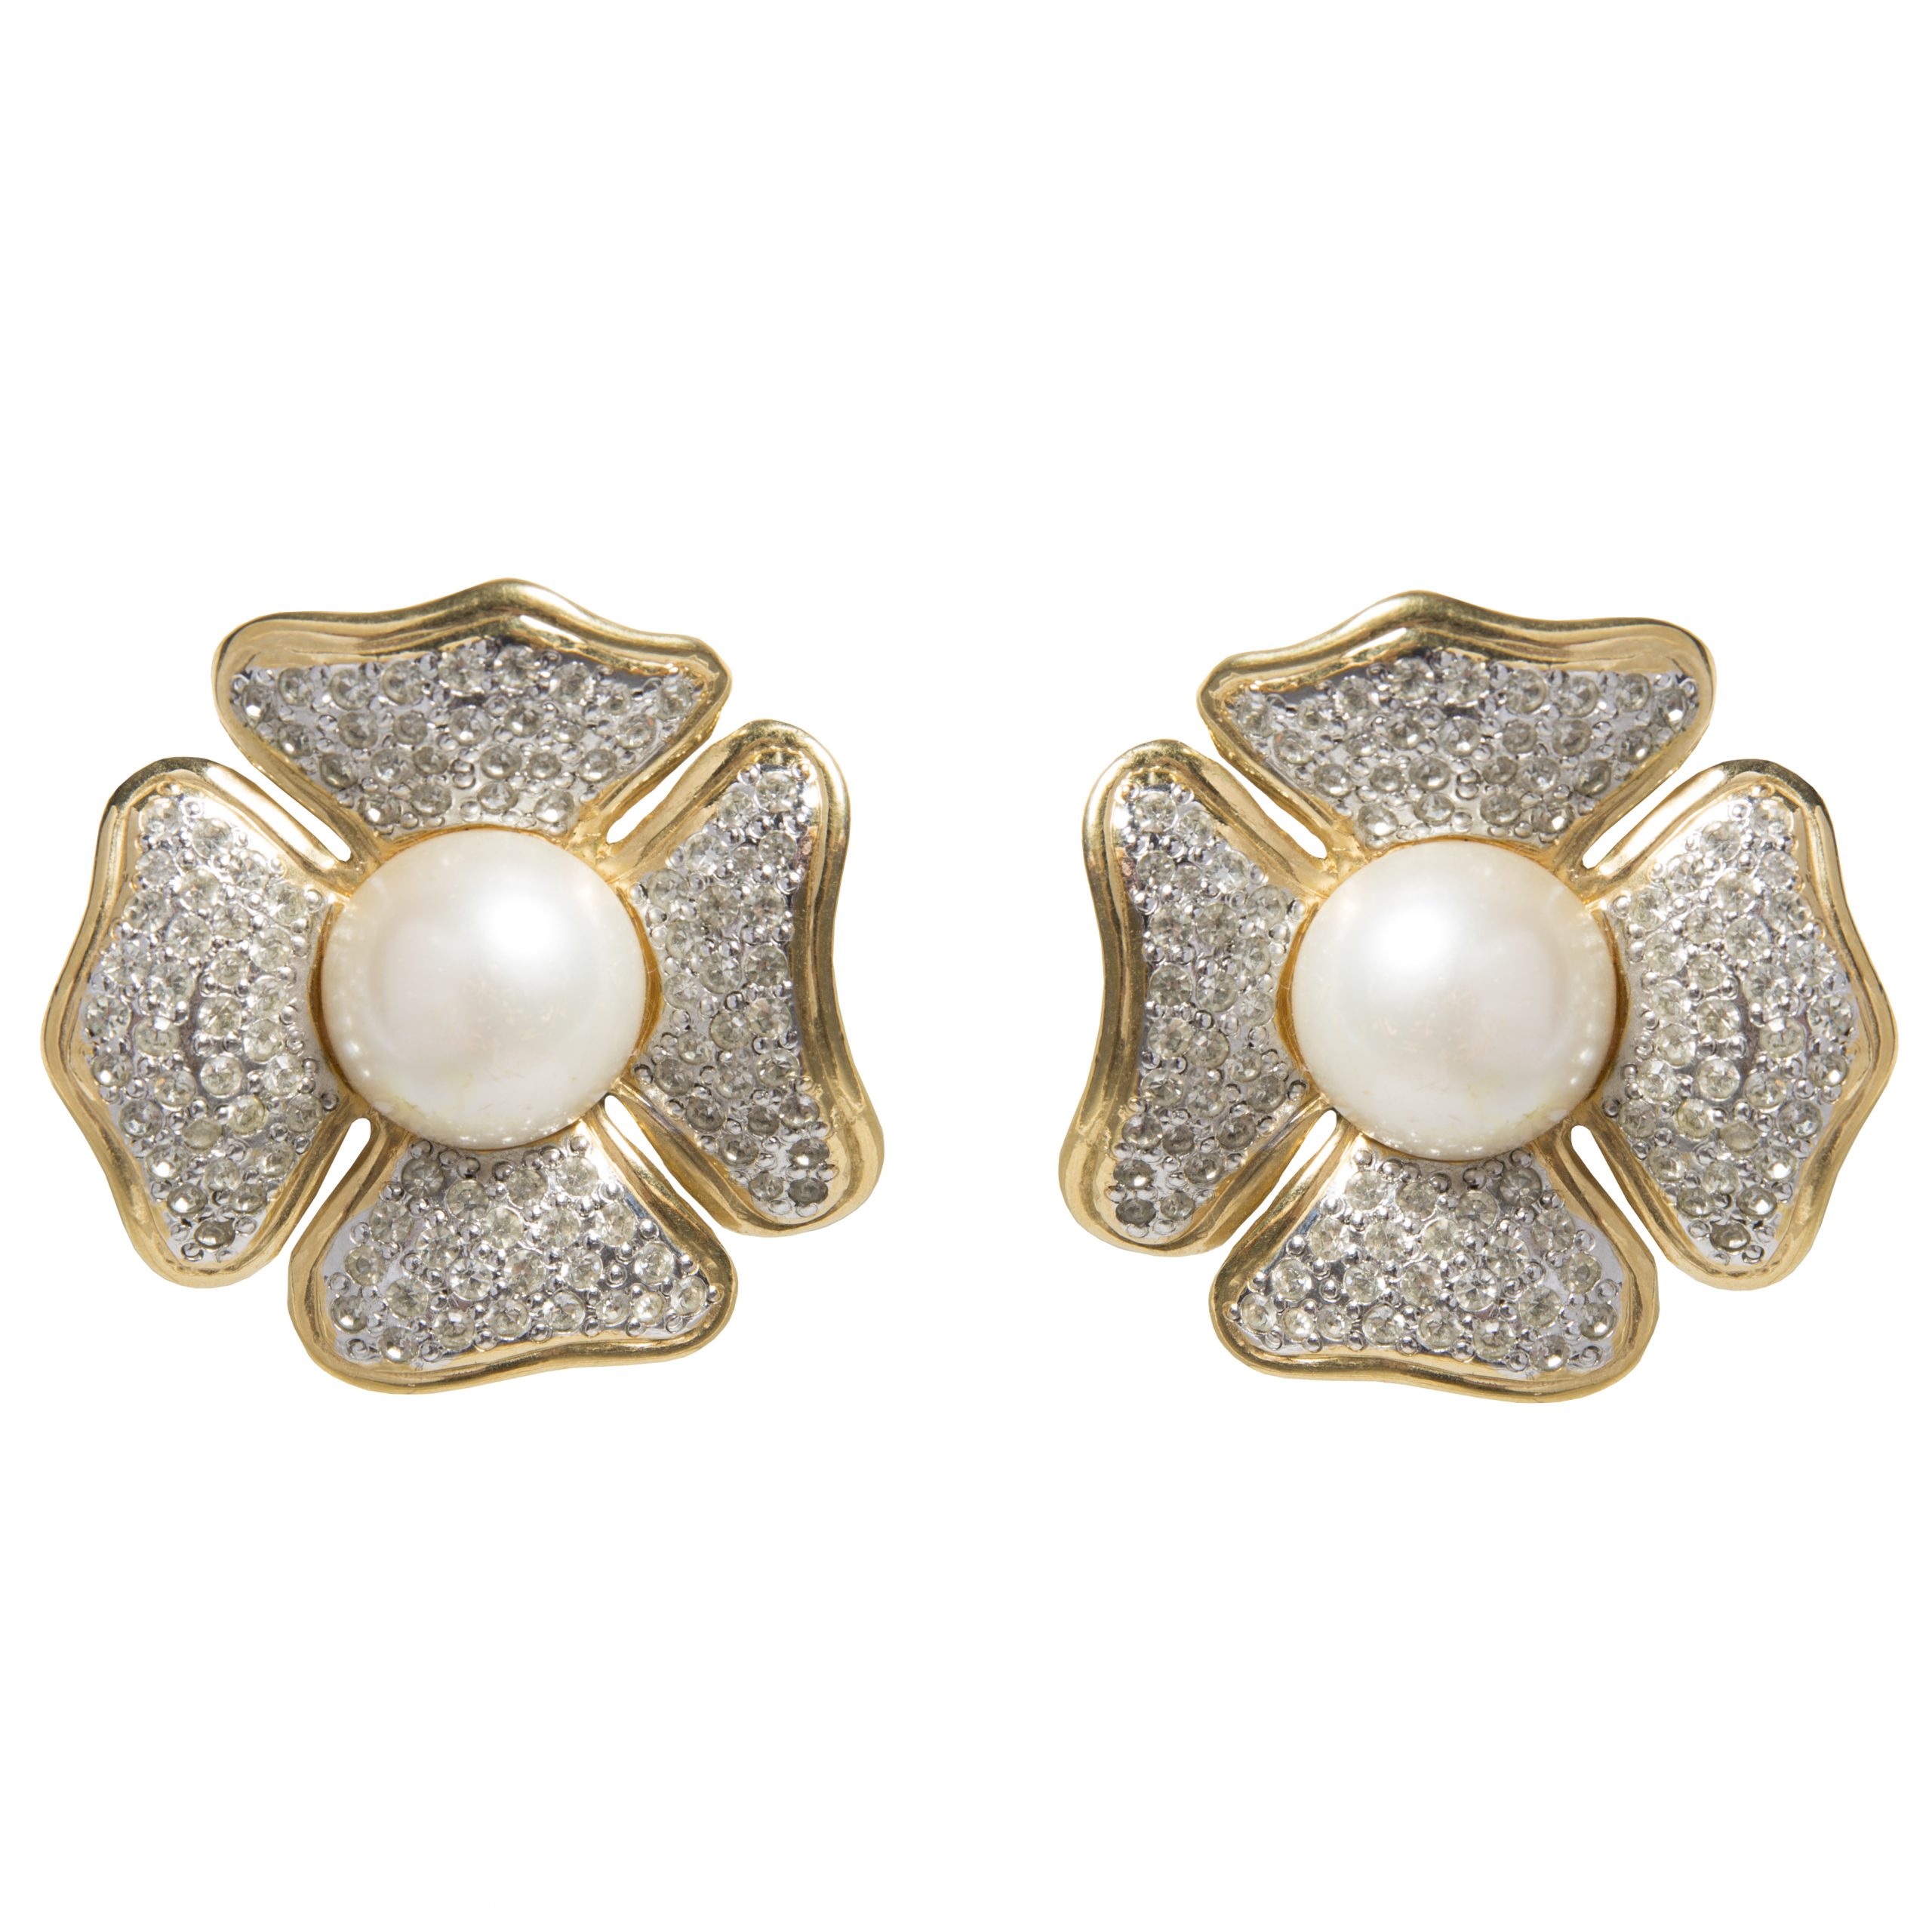 Vintage haute couture oversize flower earrings